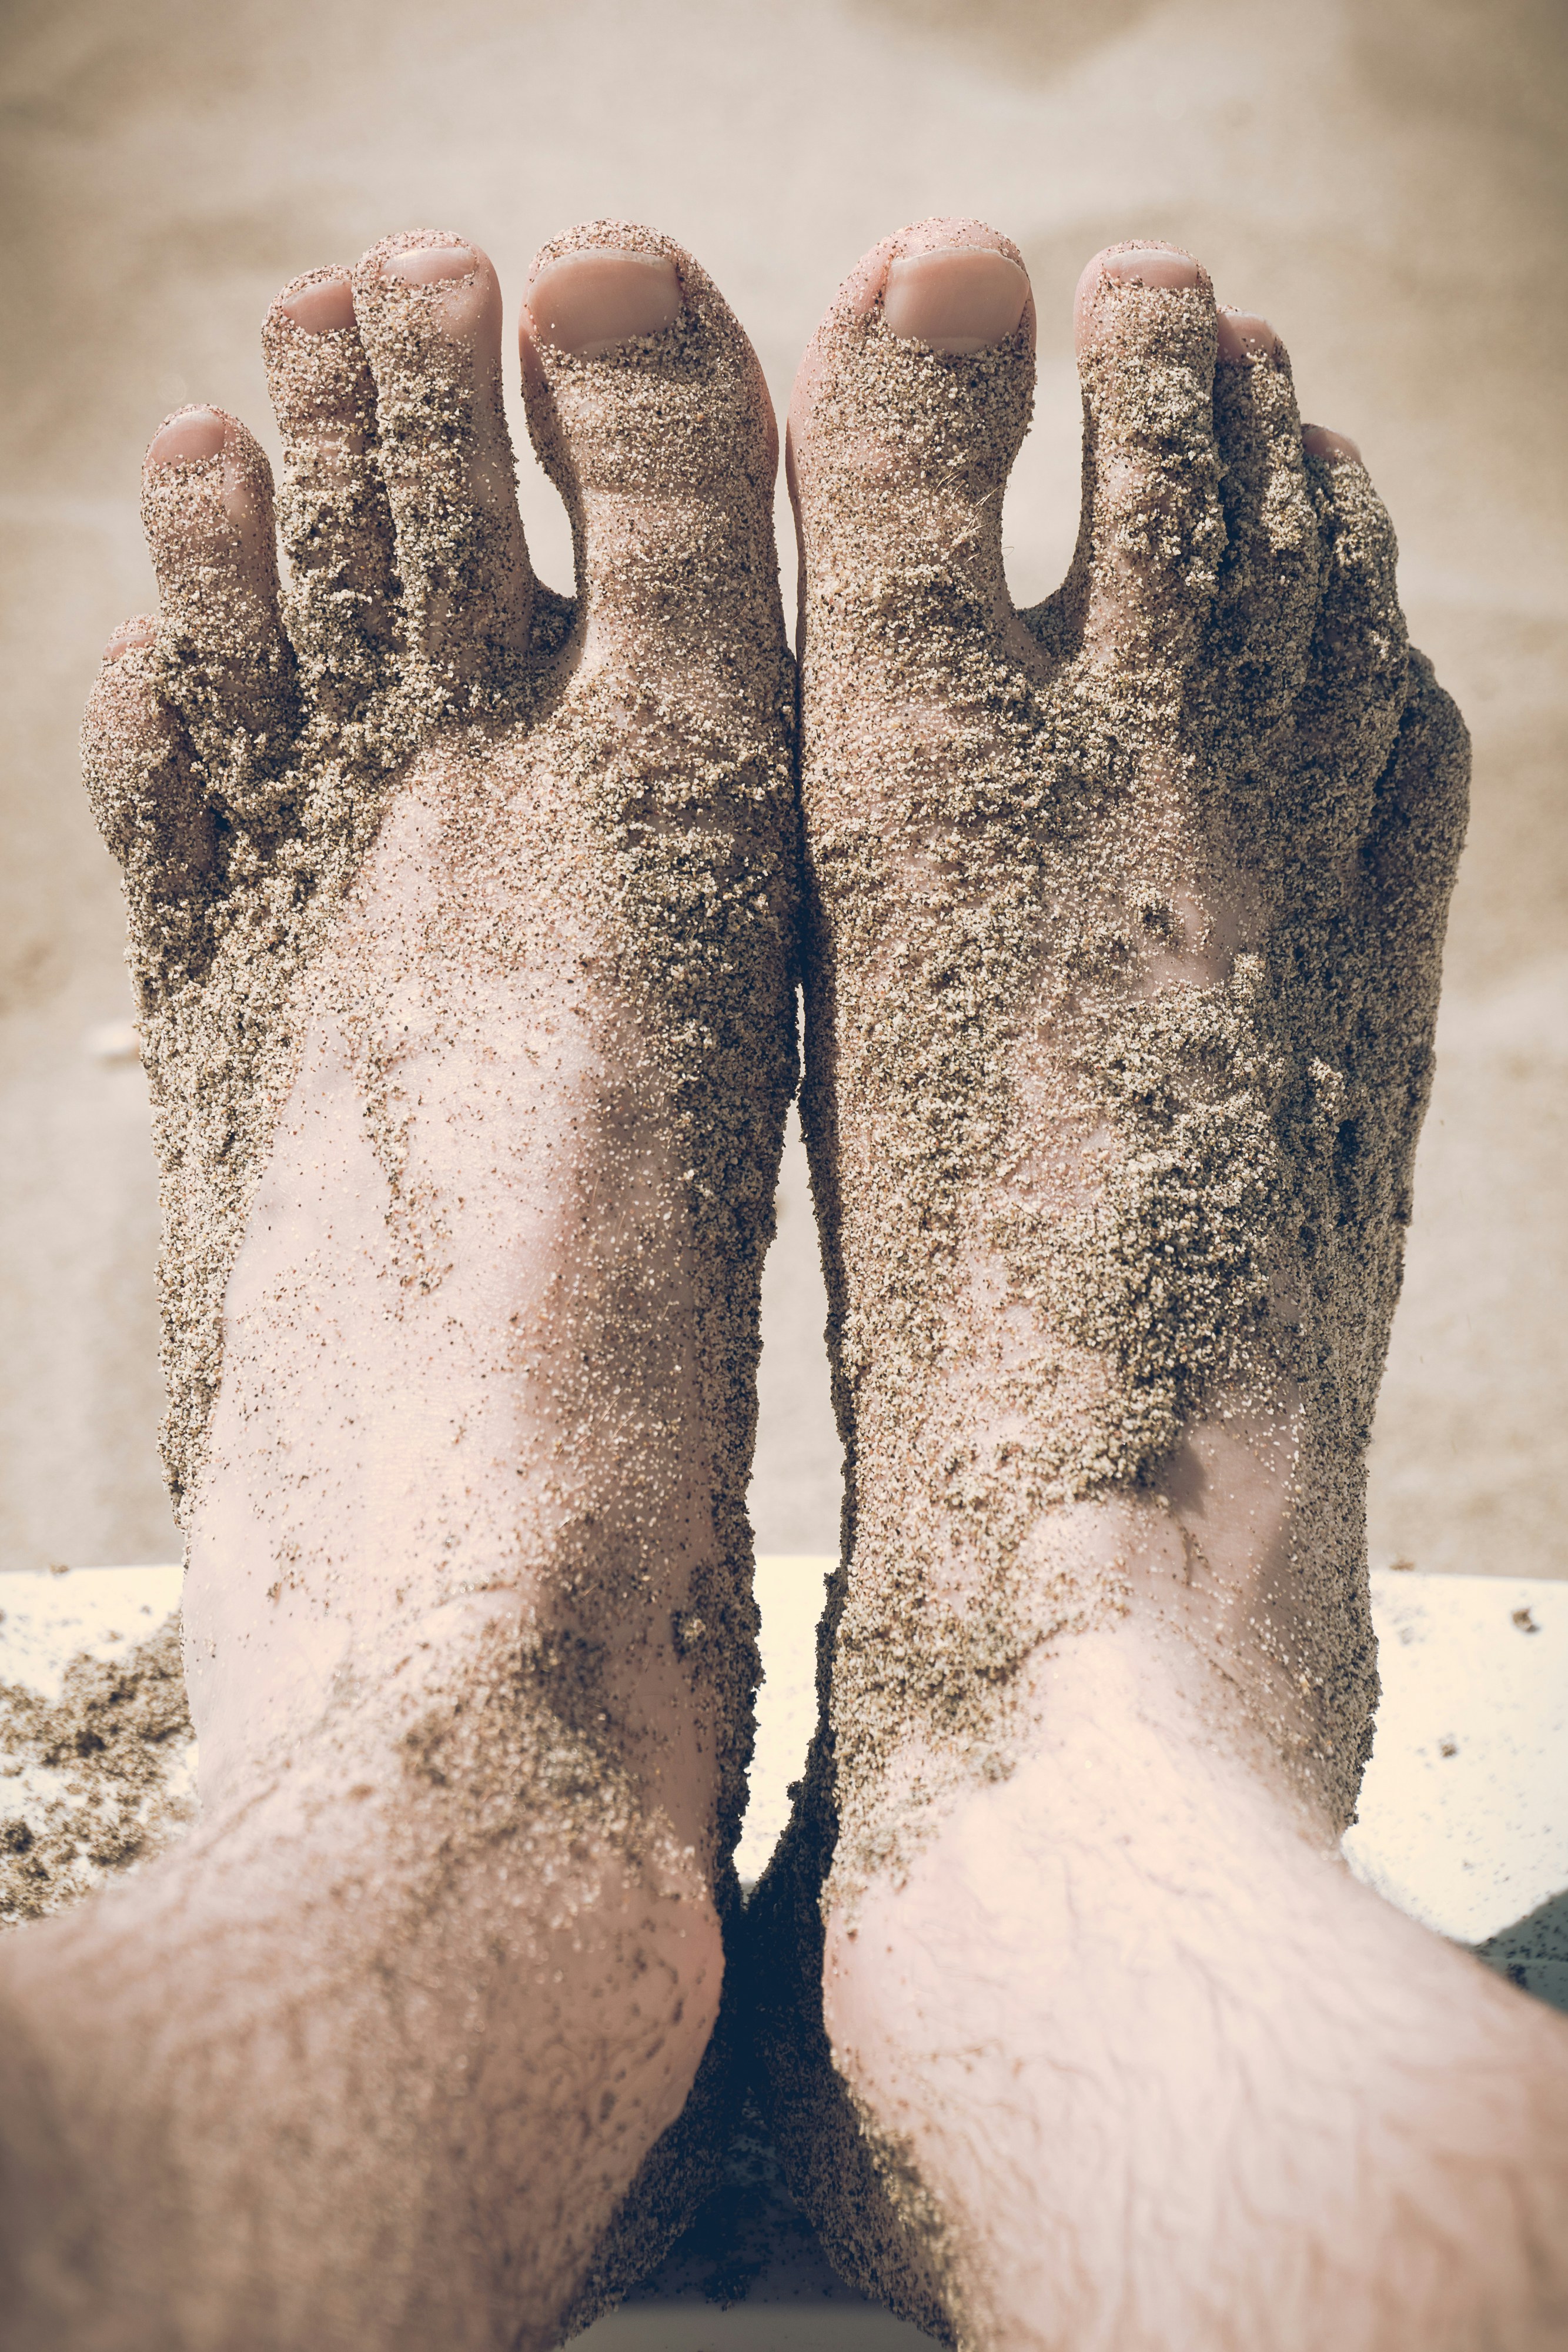 Feet covered in beach sand